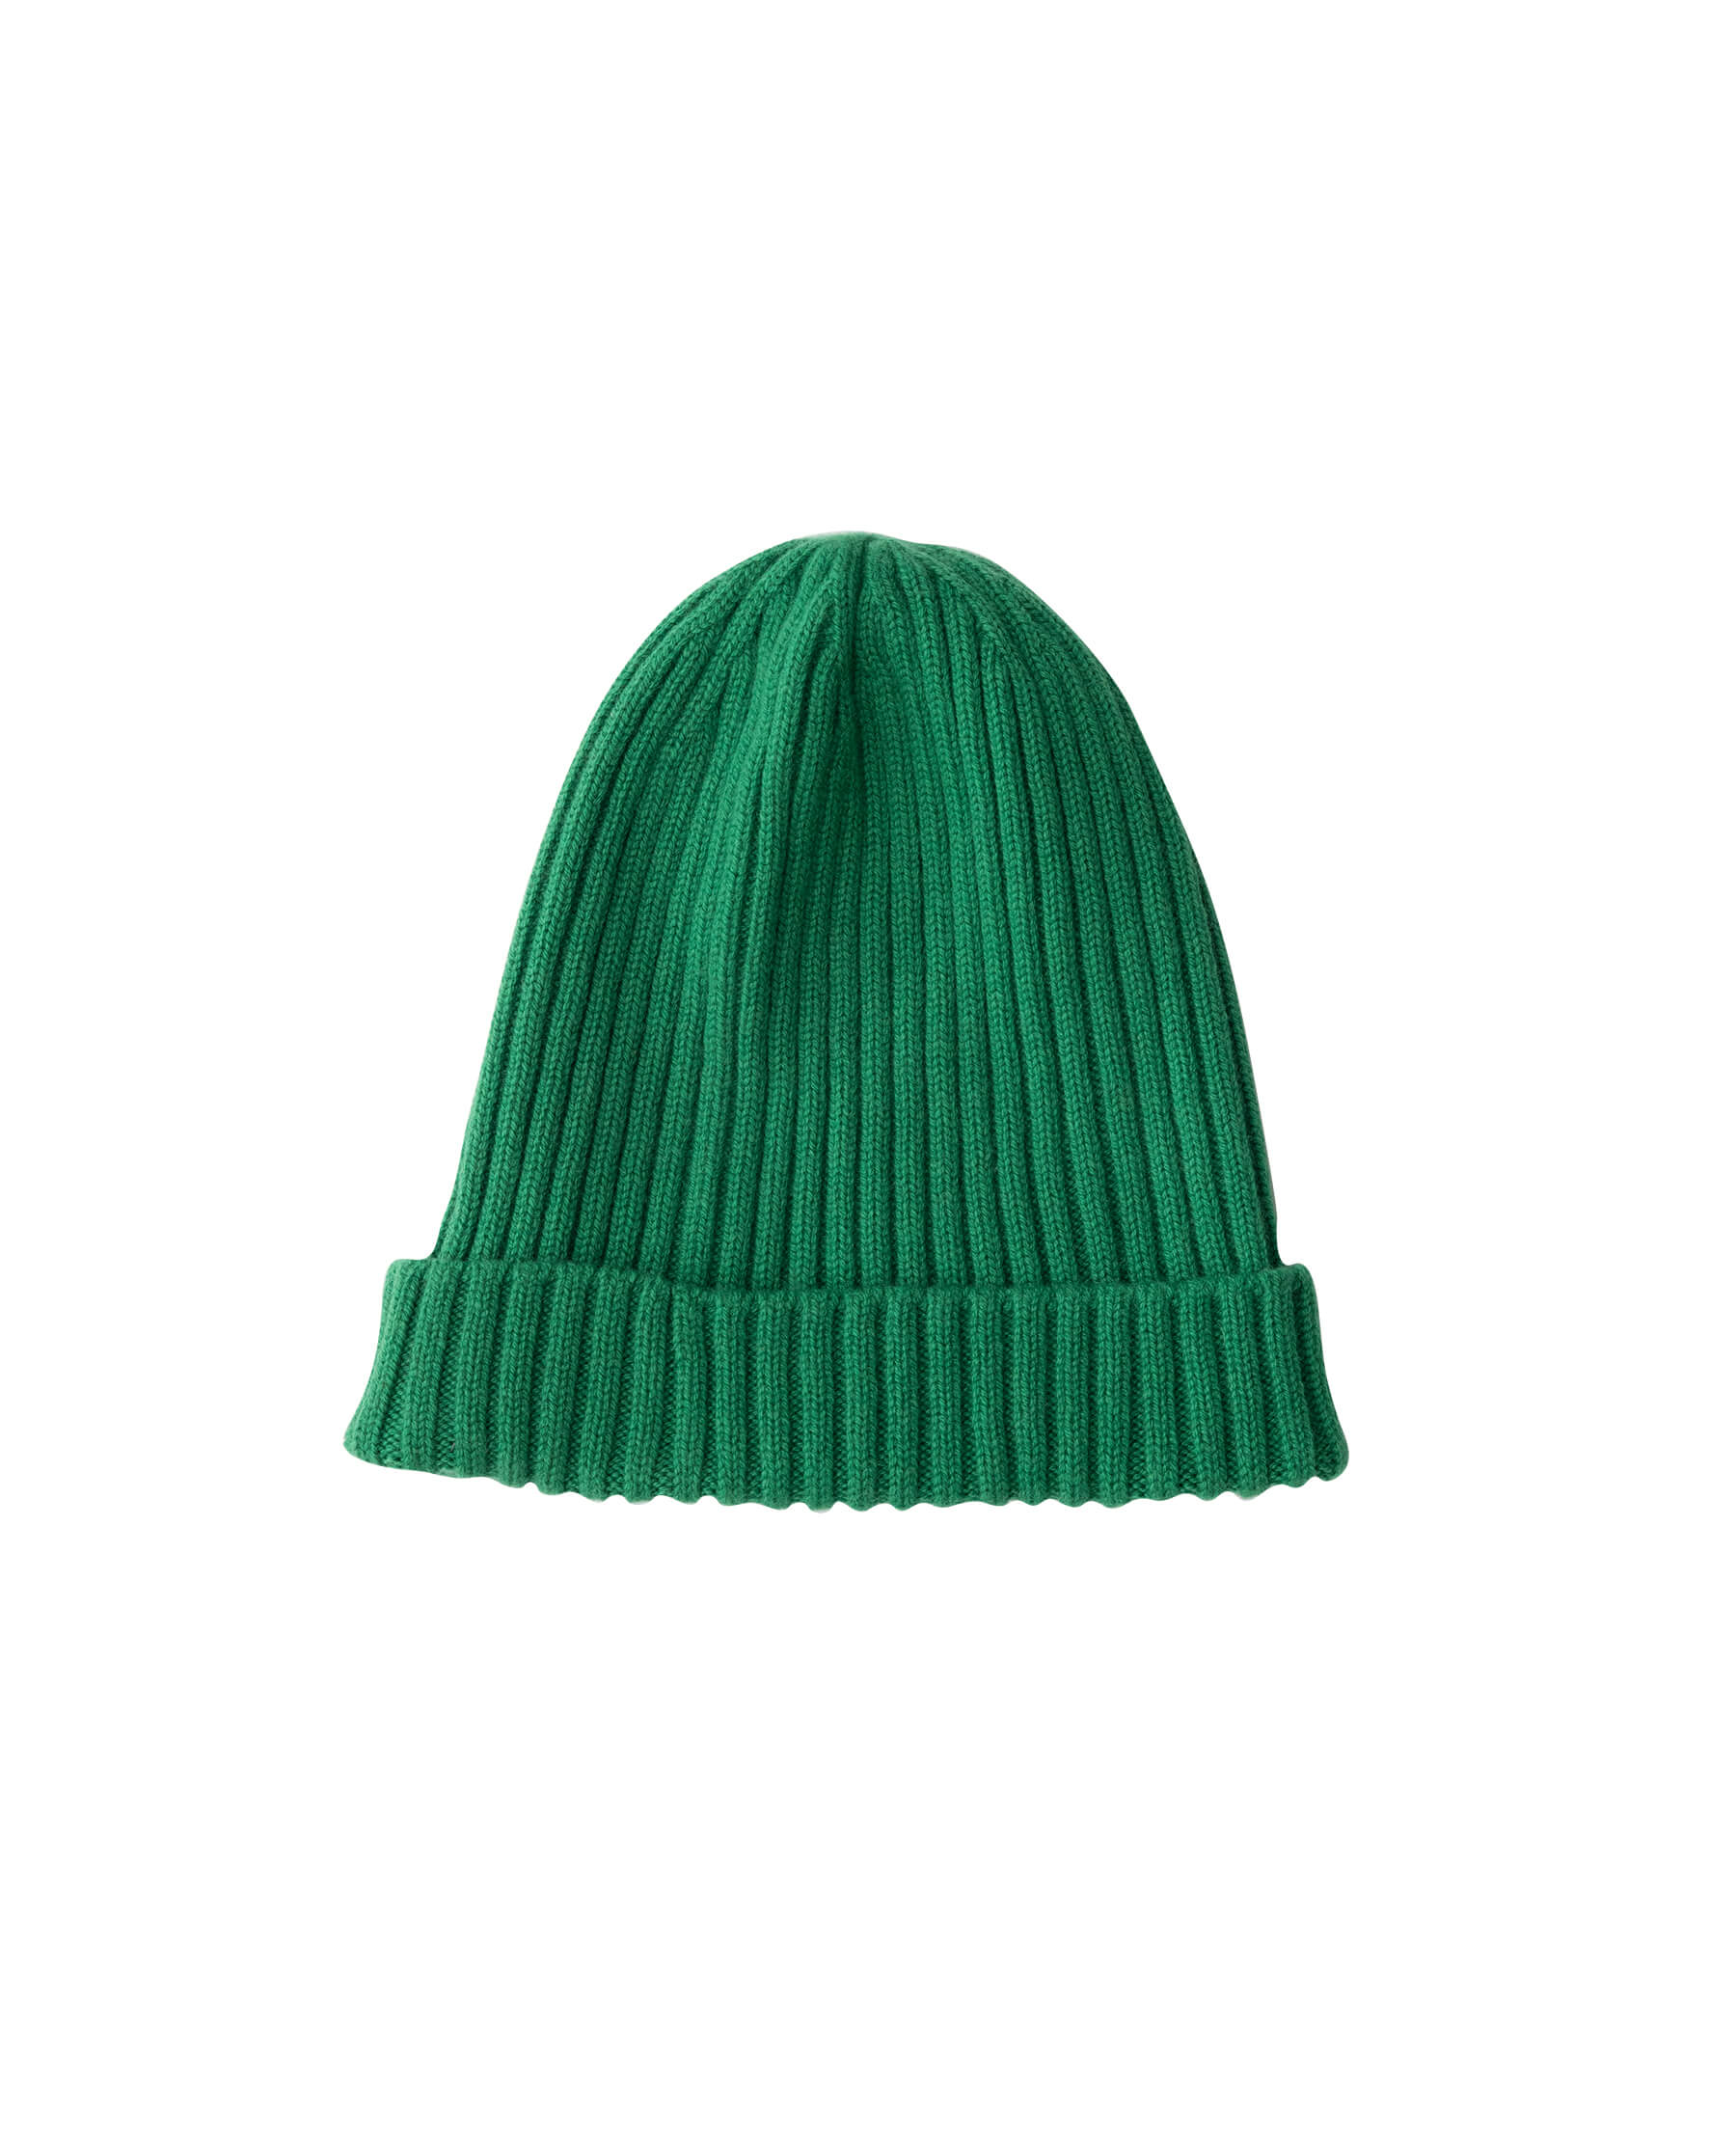 The Cashmere Hat. -- Bright Alpine